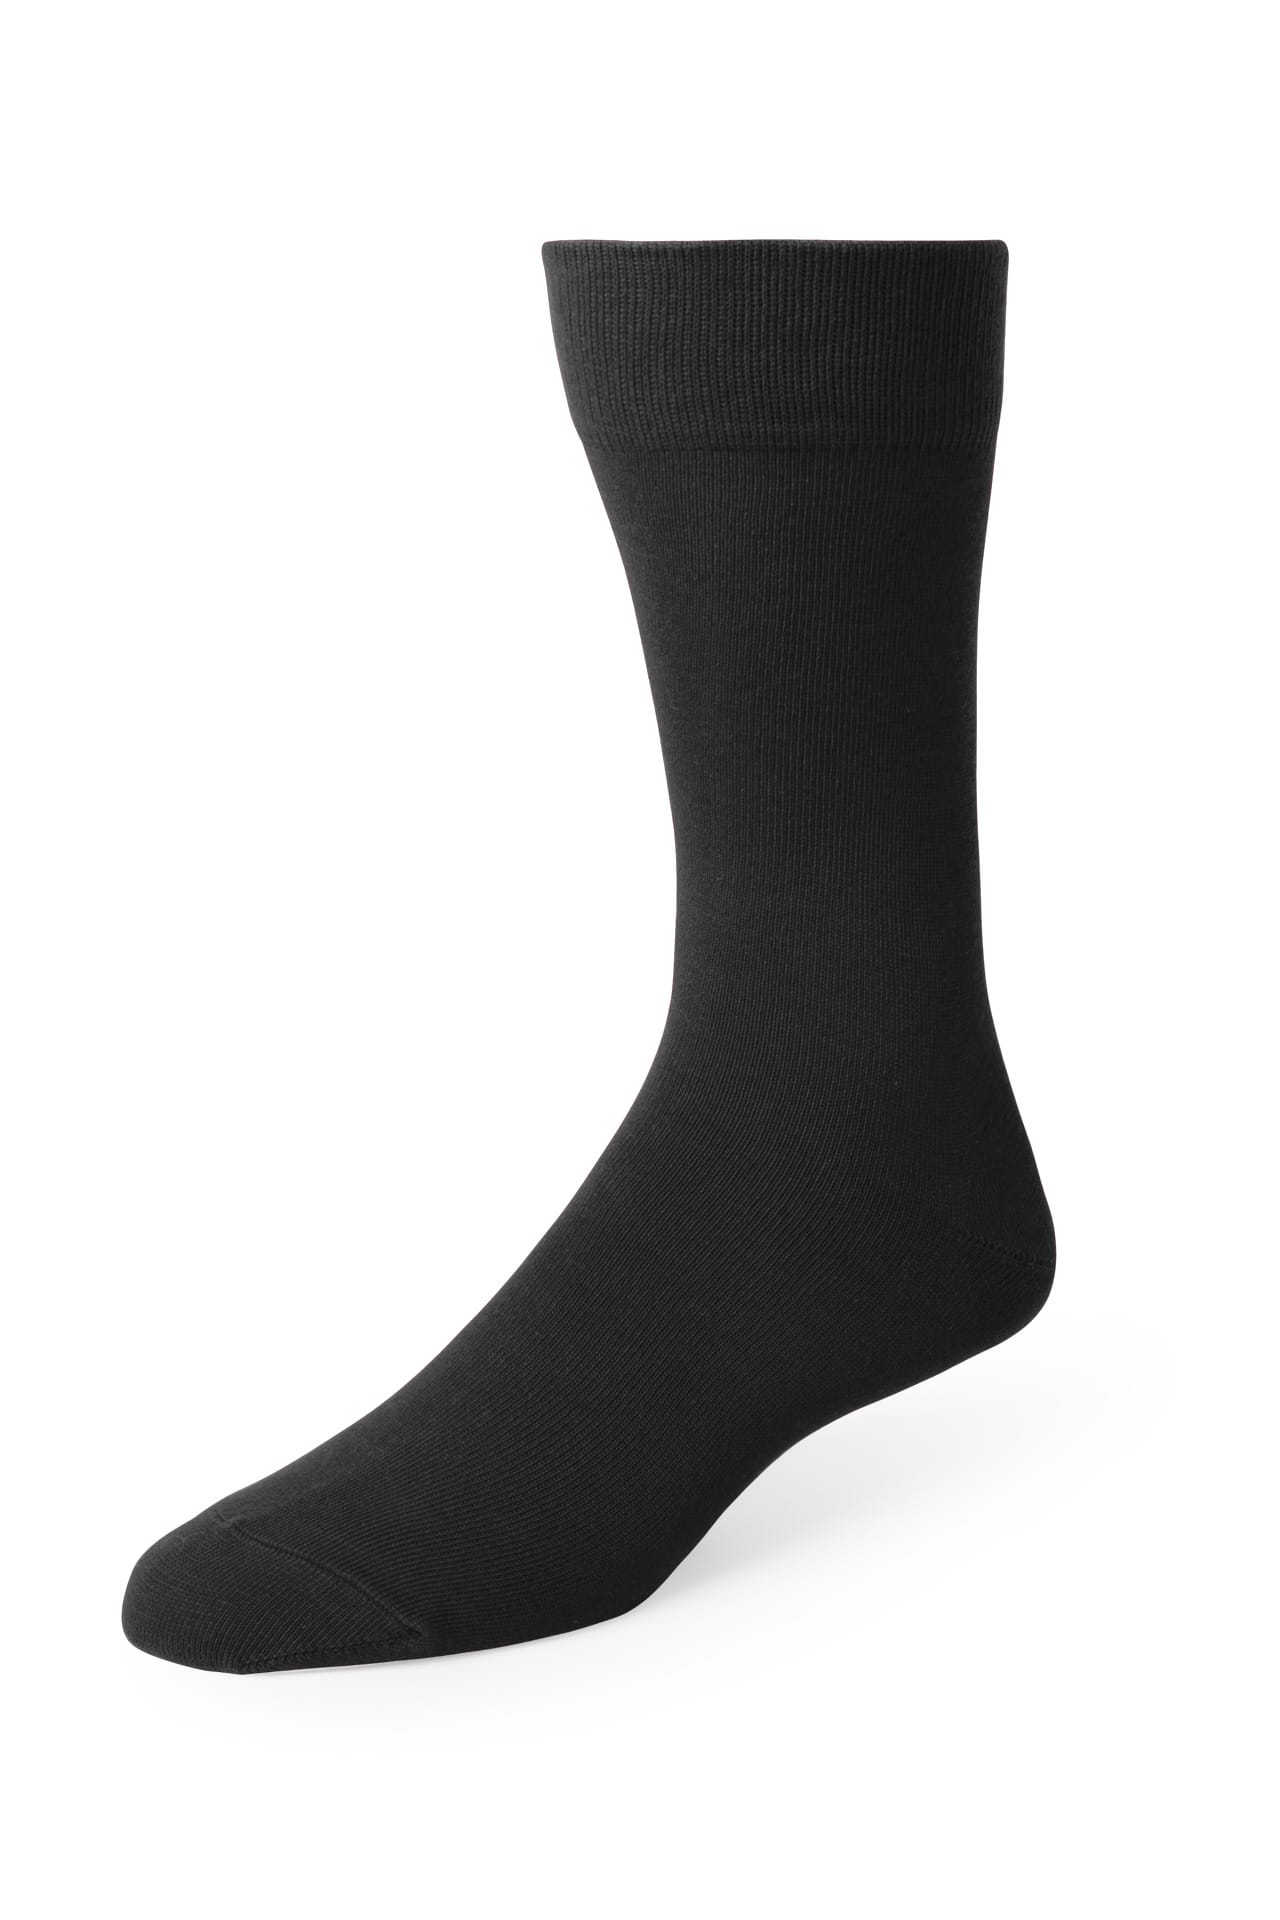 Black Men's Dress Socks